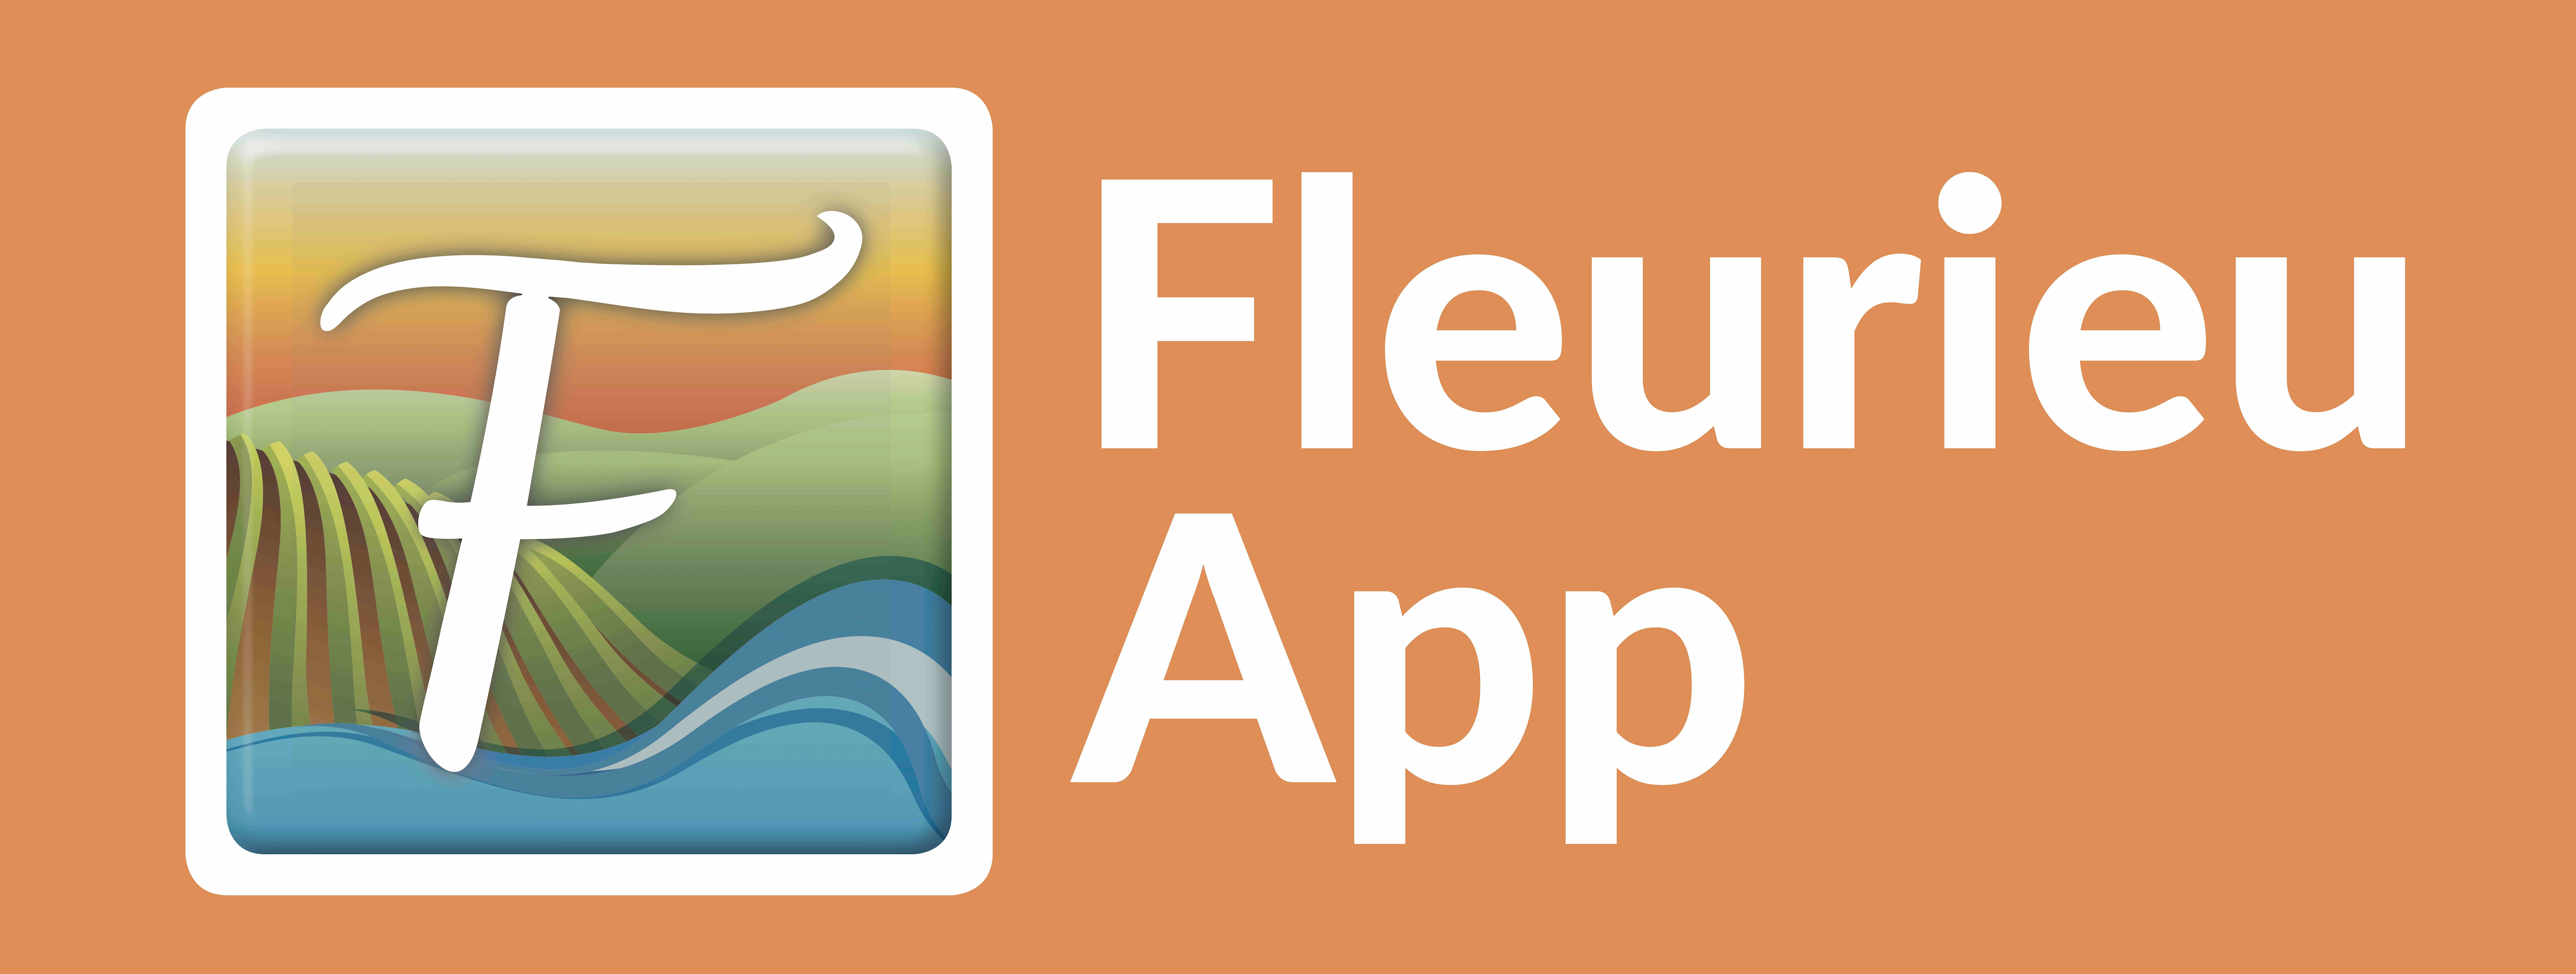 Fleurieu App Logo 4 - bevel rounded xtraxtrasmall